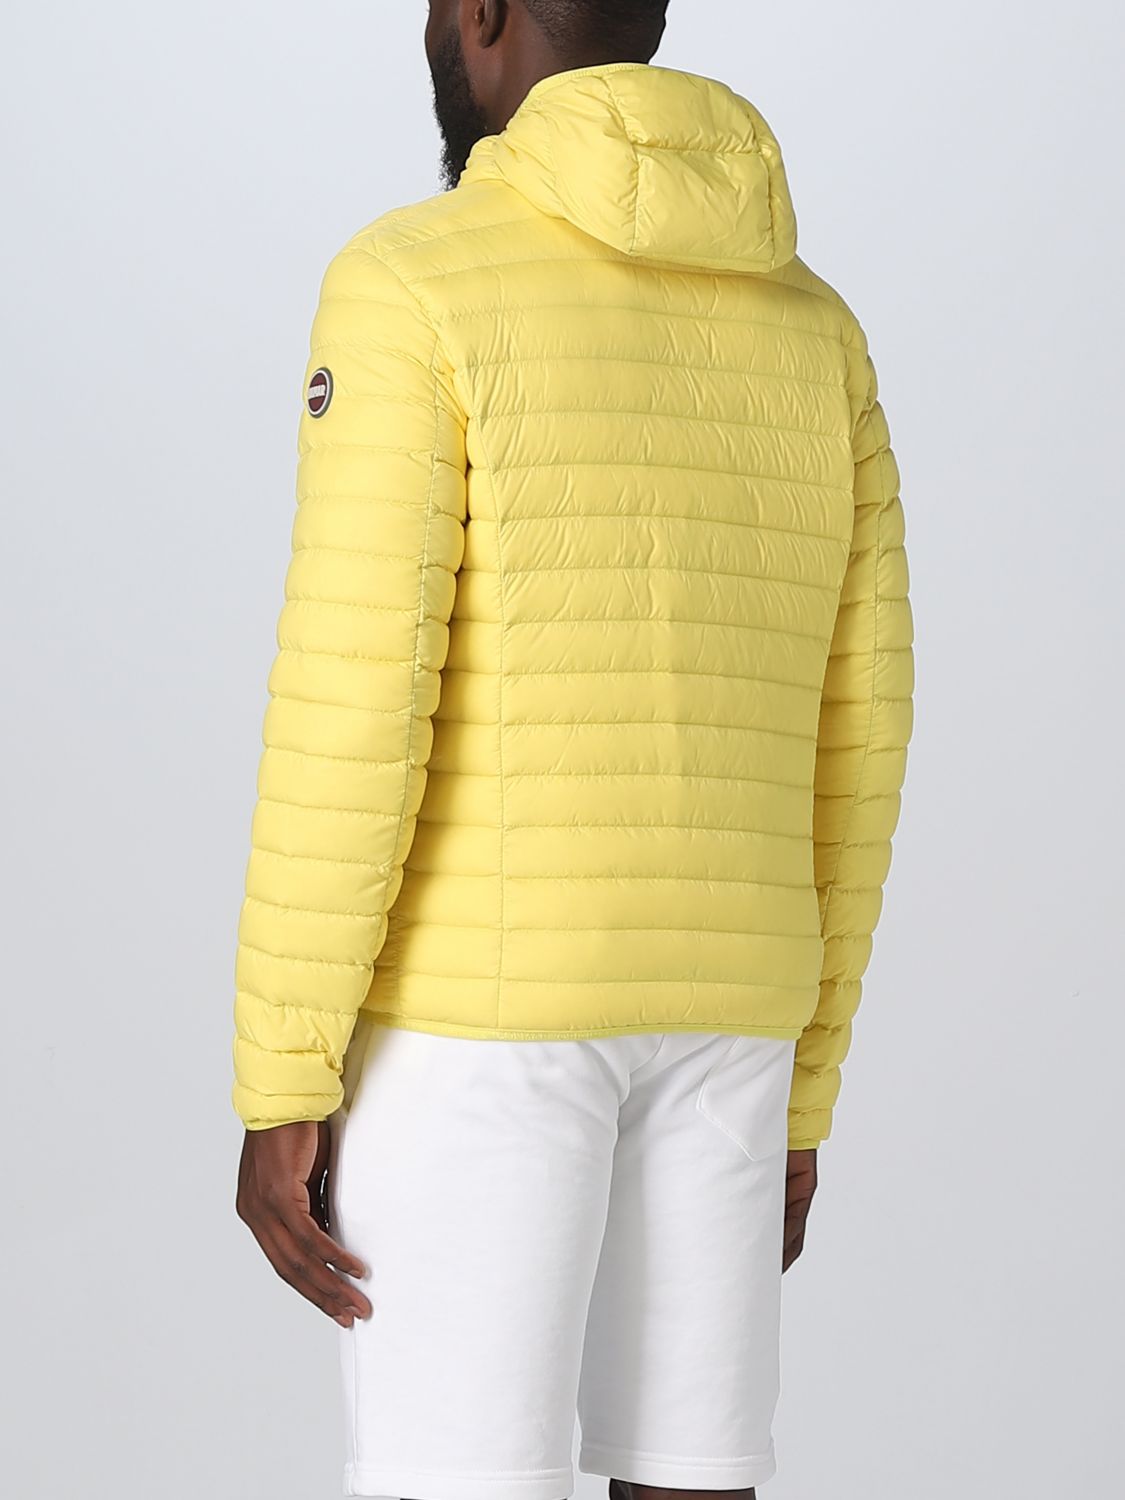 COLMAR: jacket for man - Yellow | Colmar jacket 1277R8VX online on ...